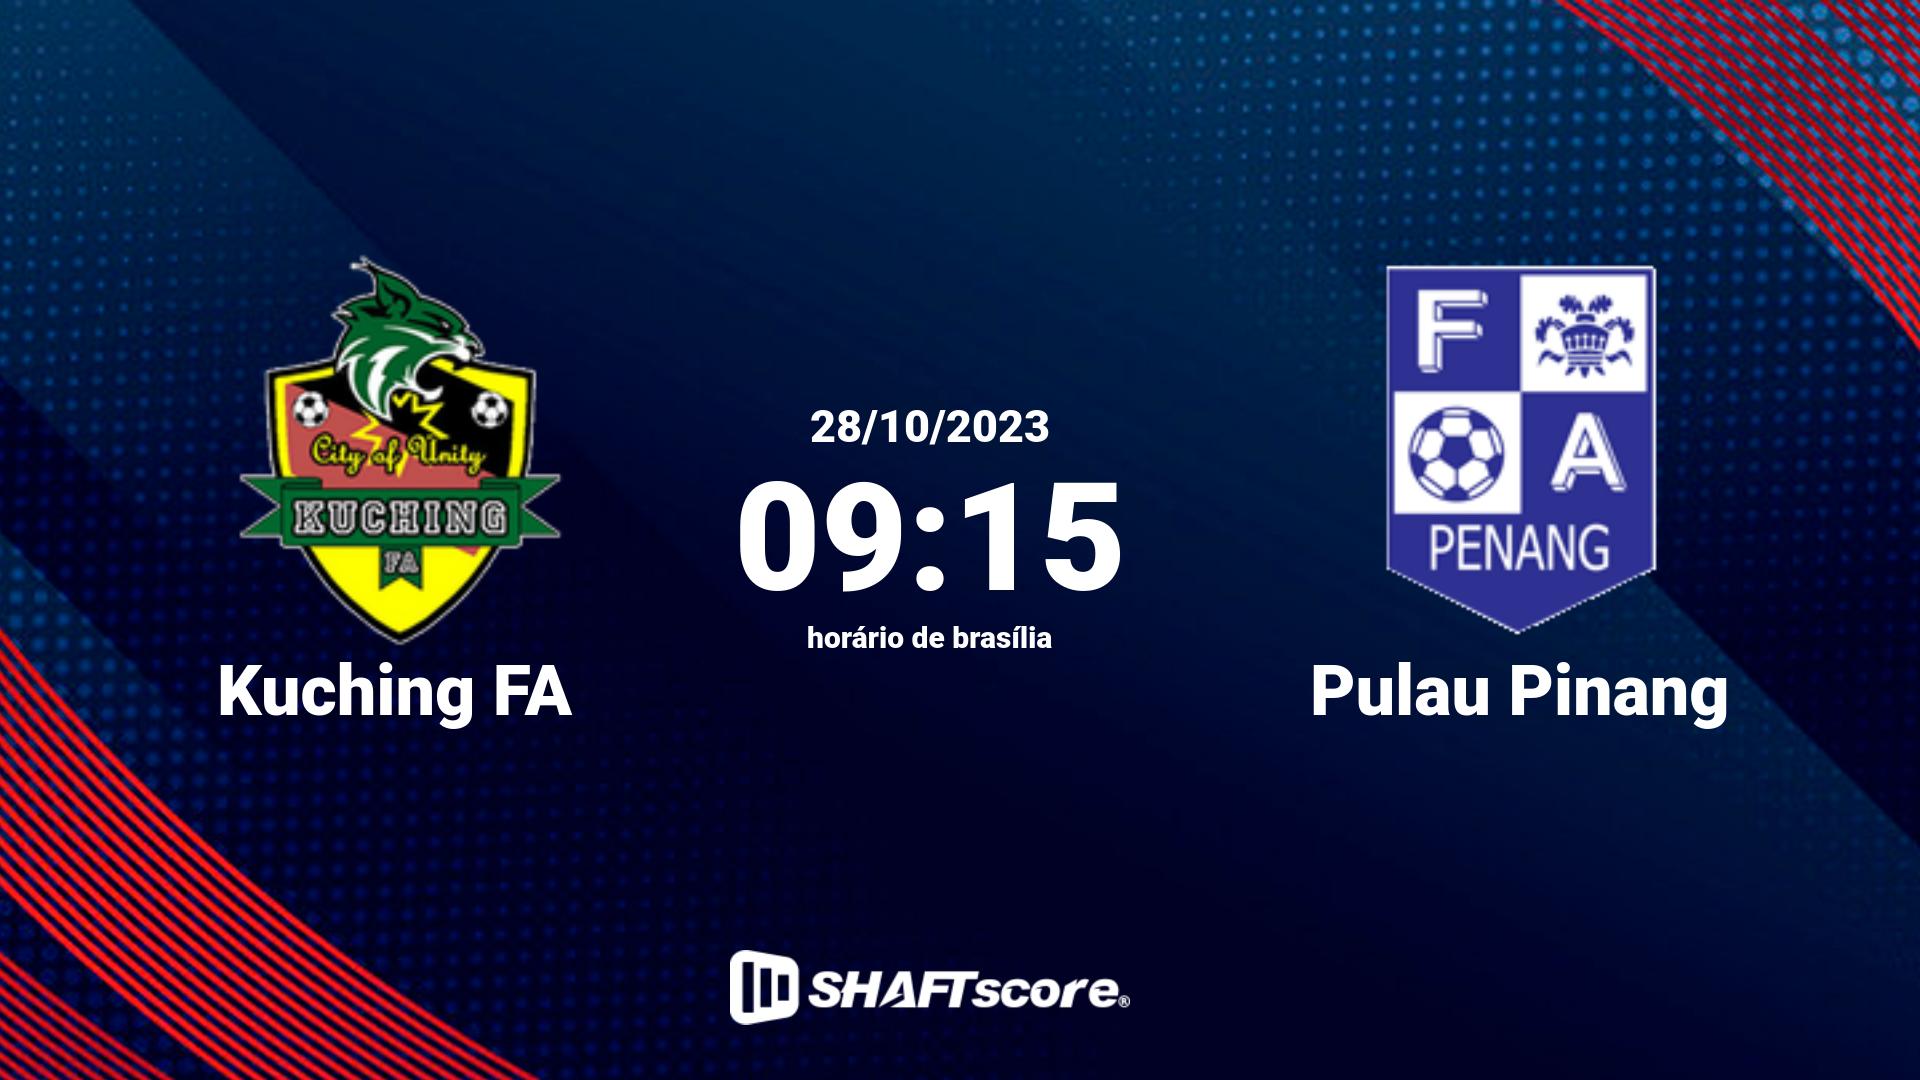 Estatísticas do jogo Kuching FA vs Pulau Pinang 28.10 09:15